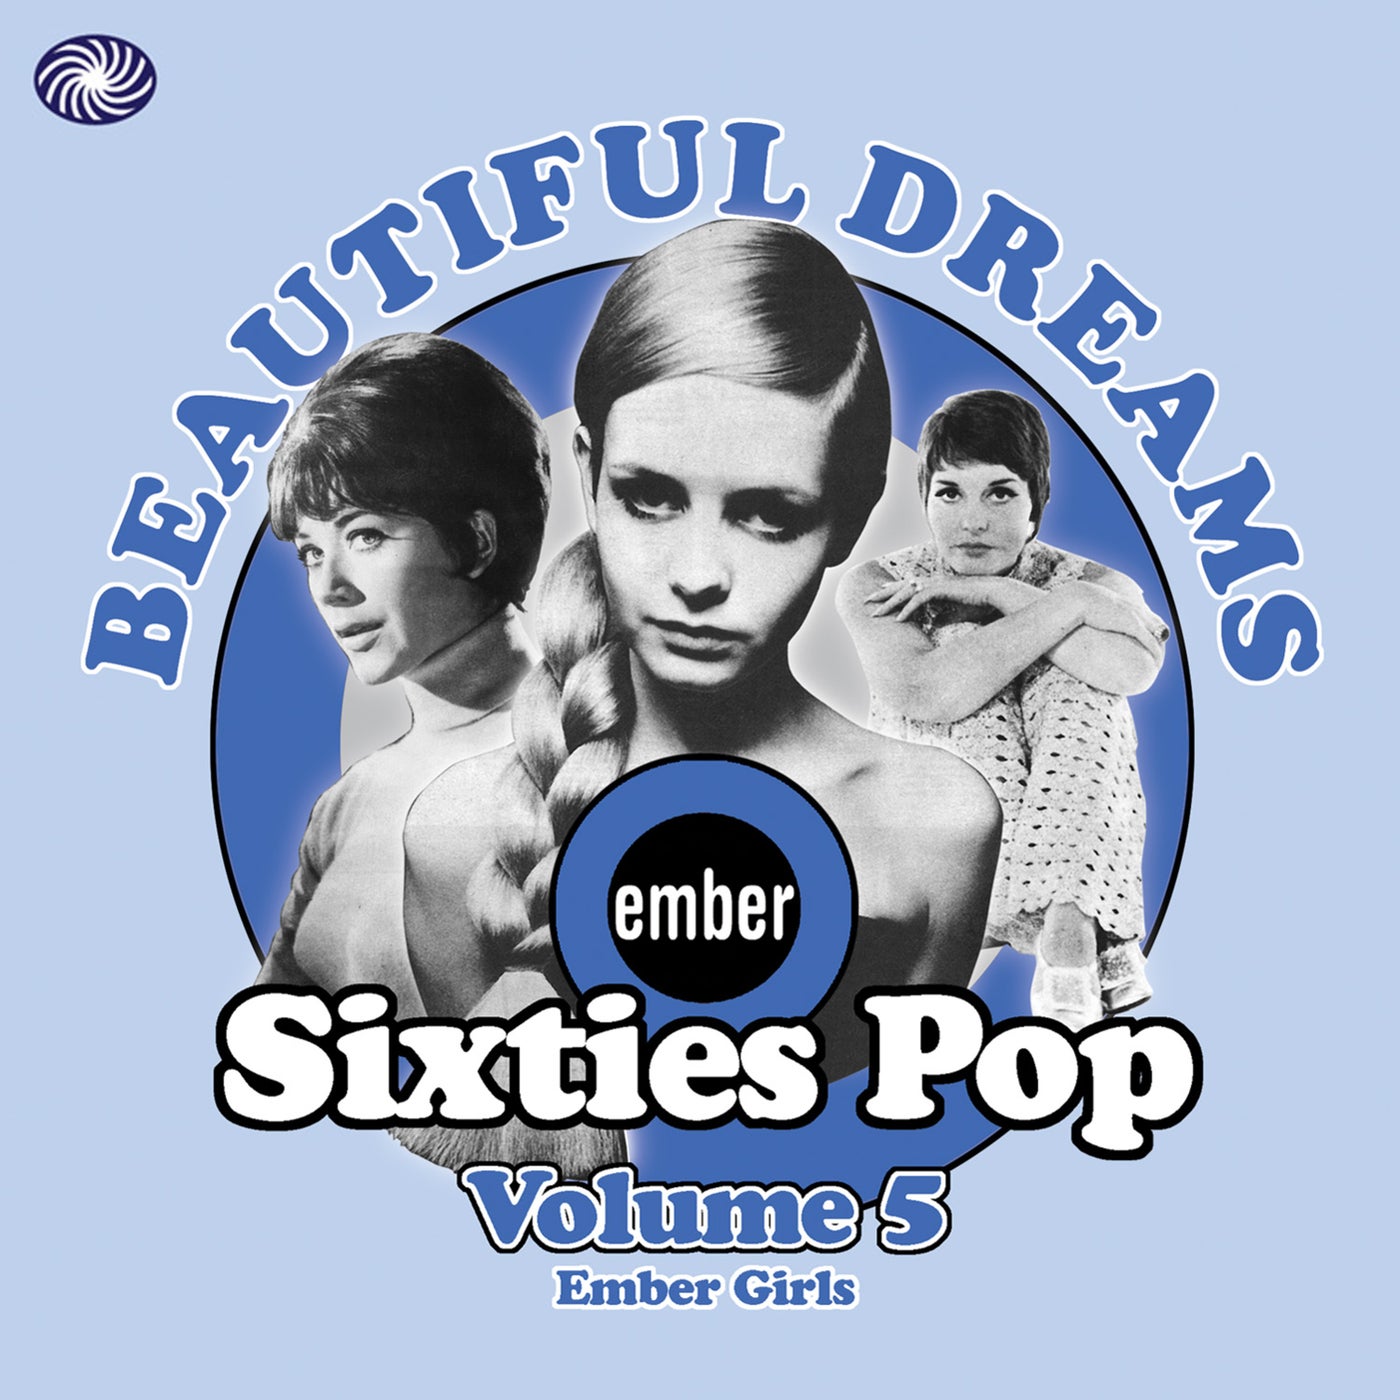 Beautiful Dreams: Ember Sixties Pop Vol. 5 - Ember Girls by Twiggy